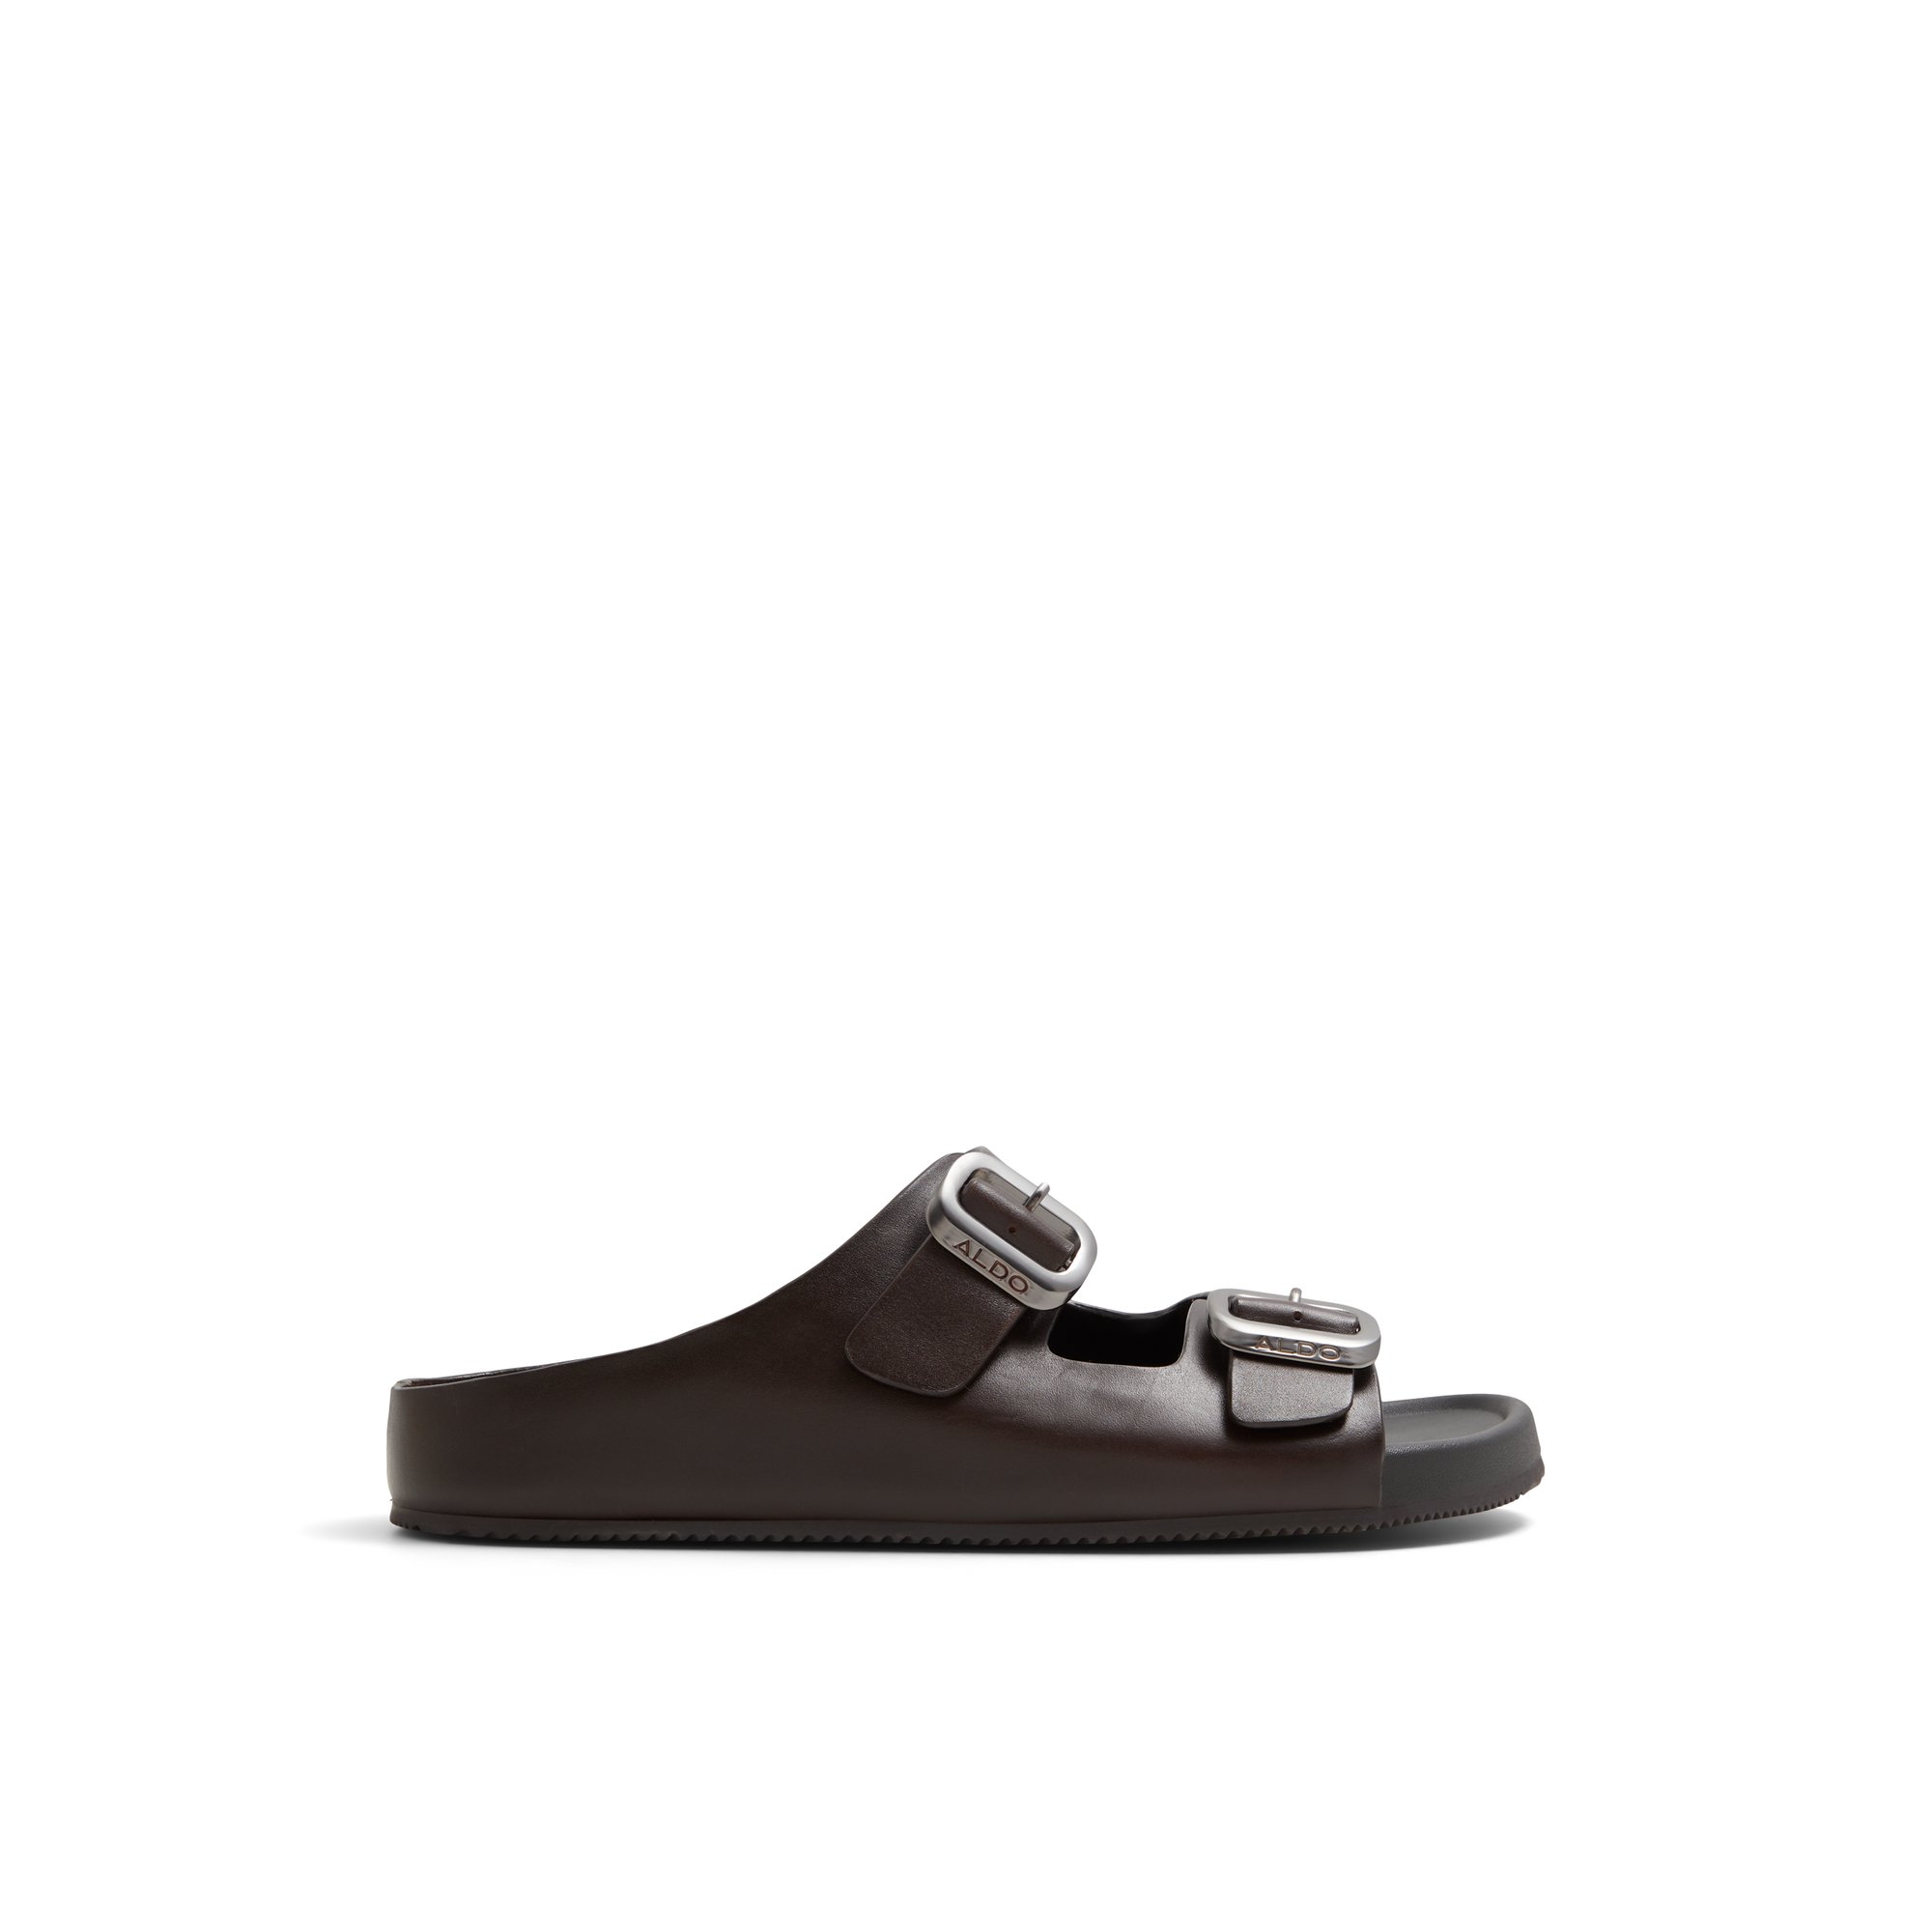 ALDO Kennebunk - Men's Sandals - Brown